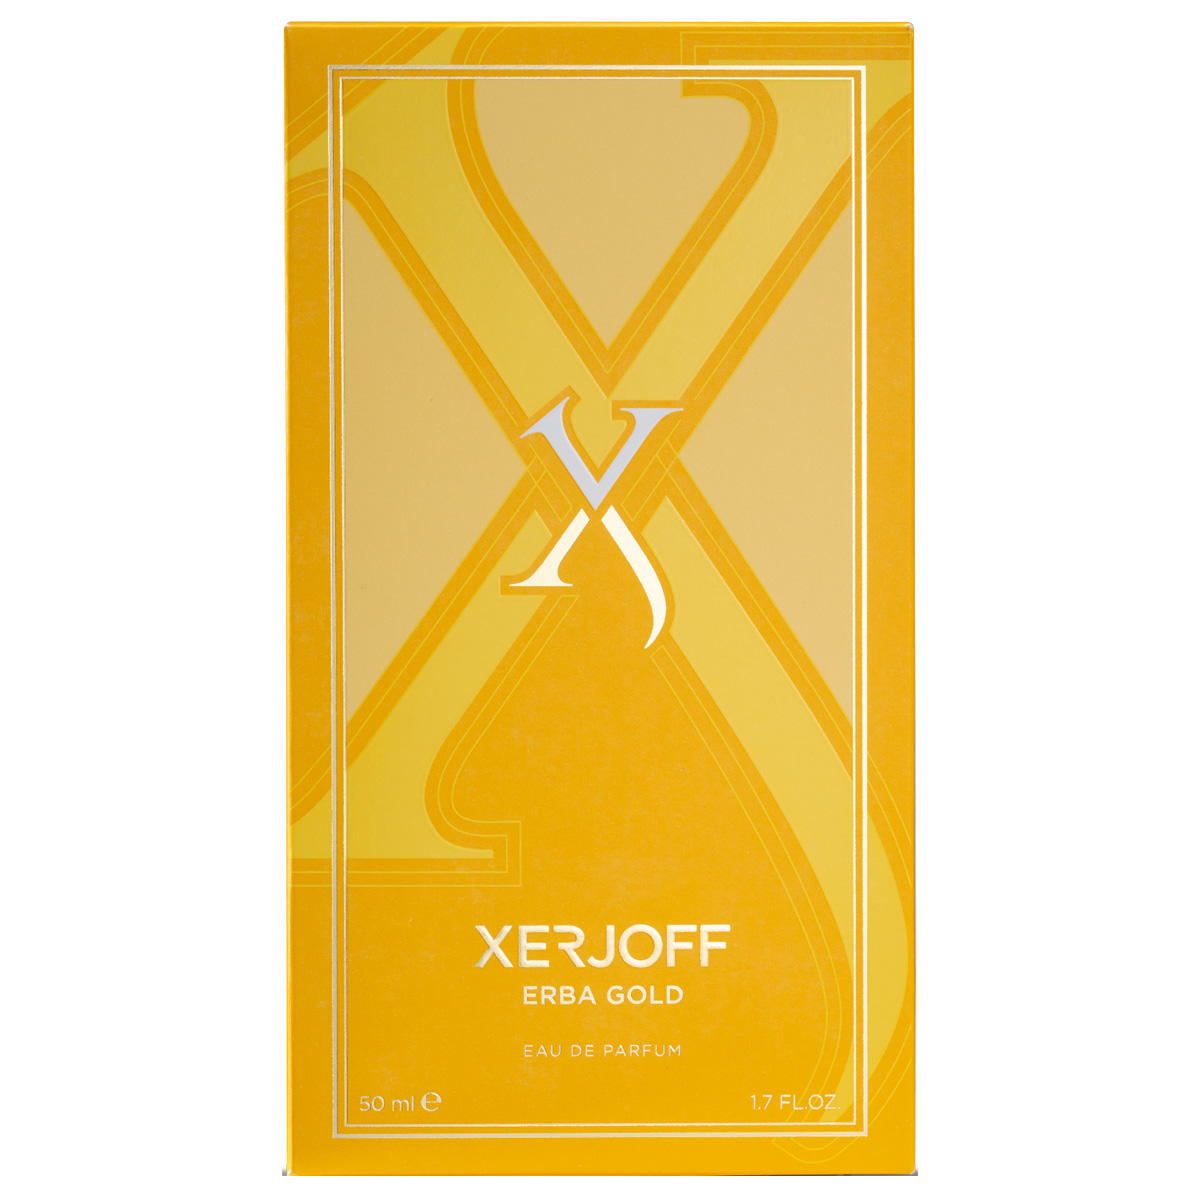 XERJOFF Vibe ERBA GOLD Eau de Parfum 50 ml - 2